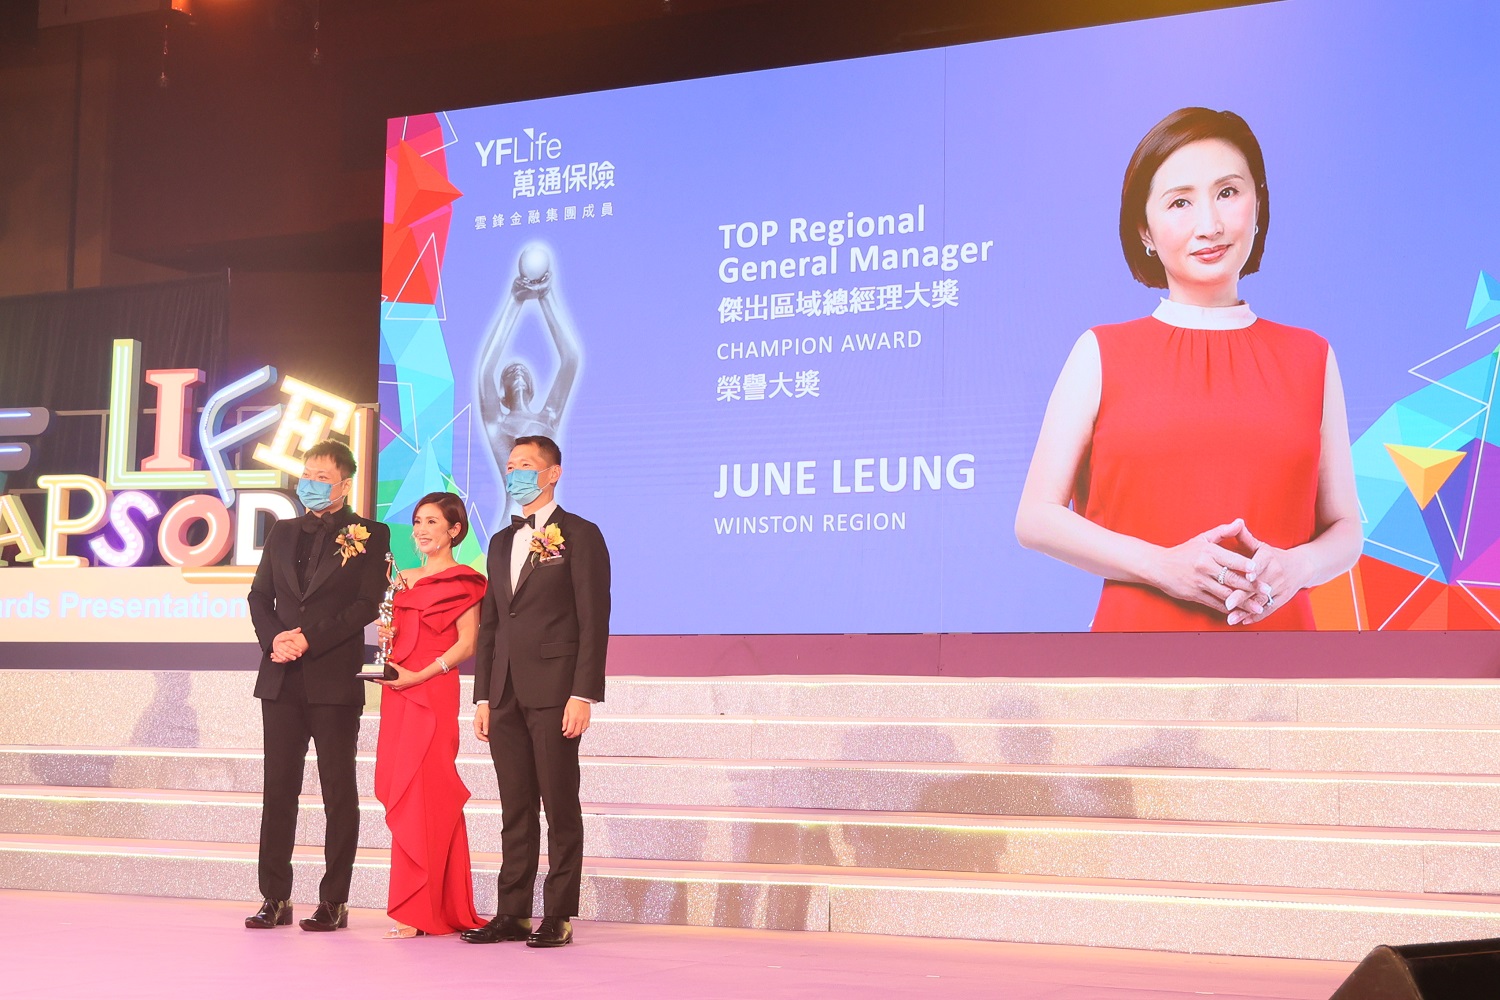 Ms. June Leung, Champion Award winner of Top Regional General Manager. 